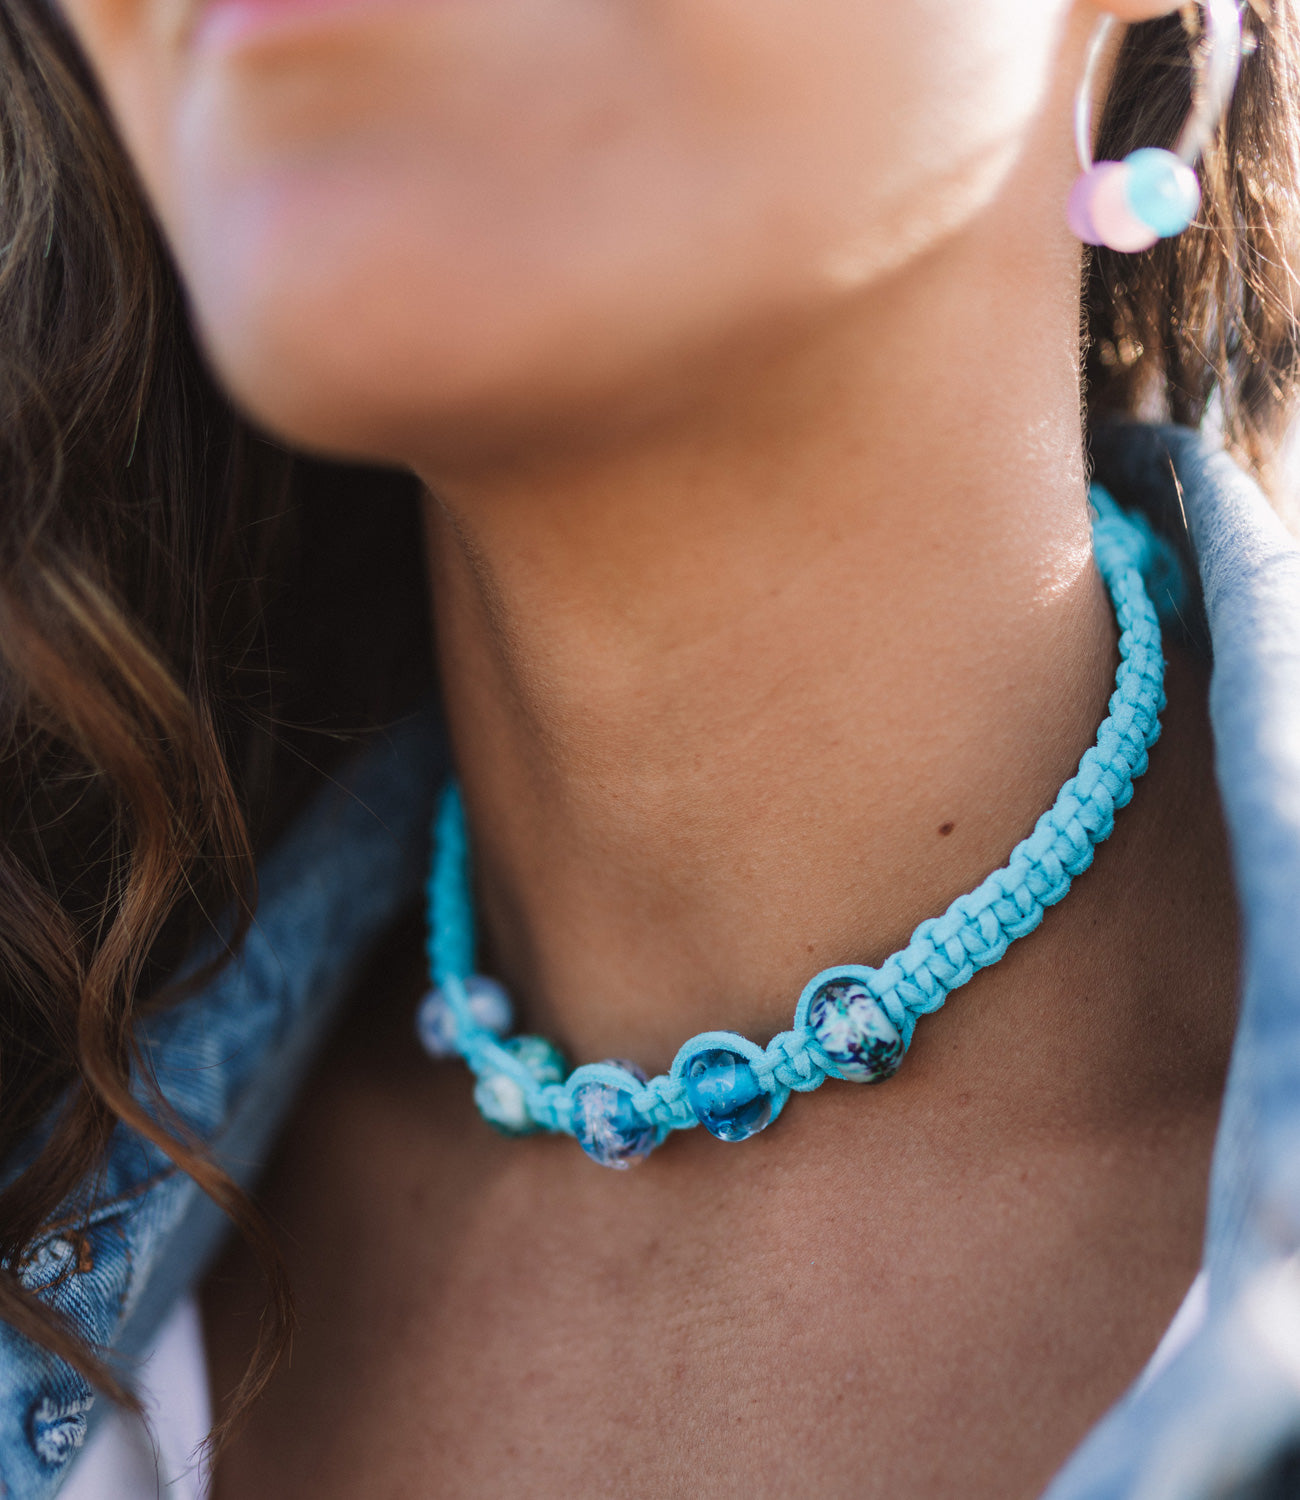 Cornish beads in shades of blue on turquoise macrame chocker necklace.